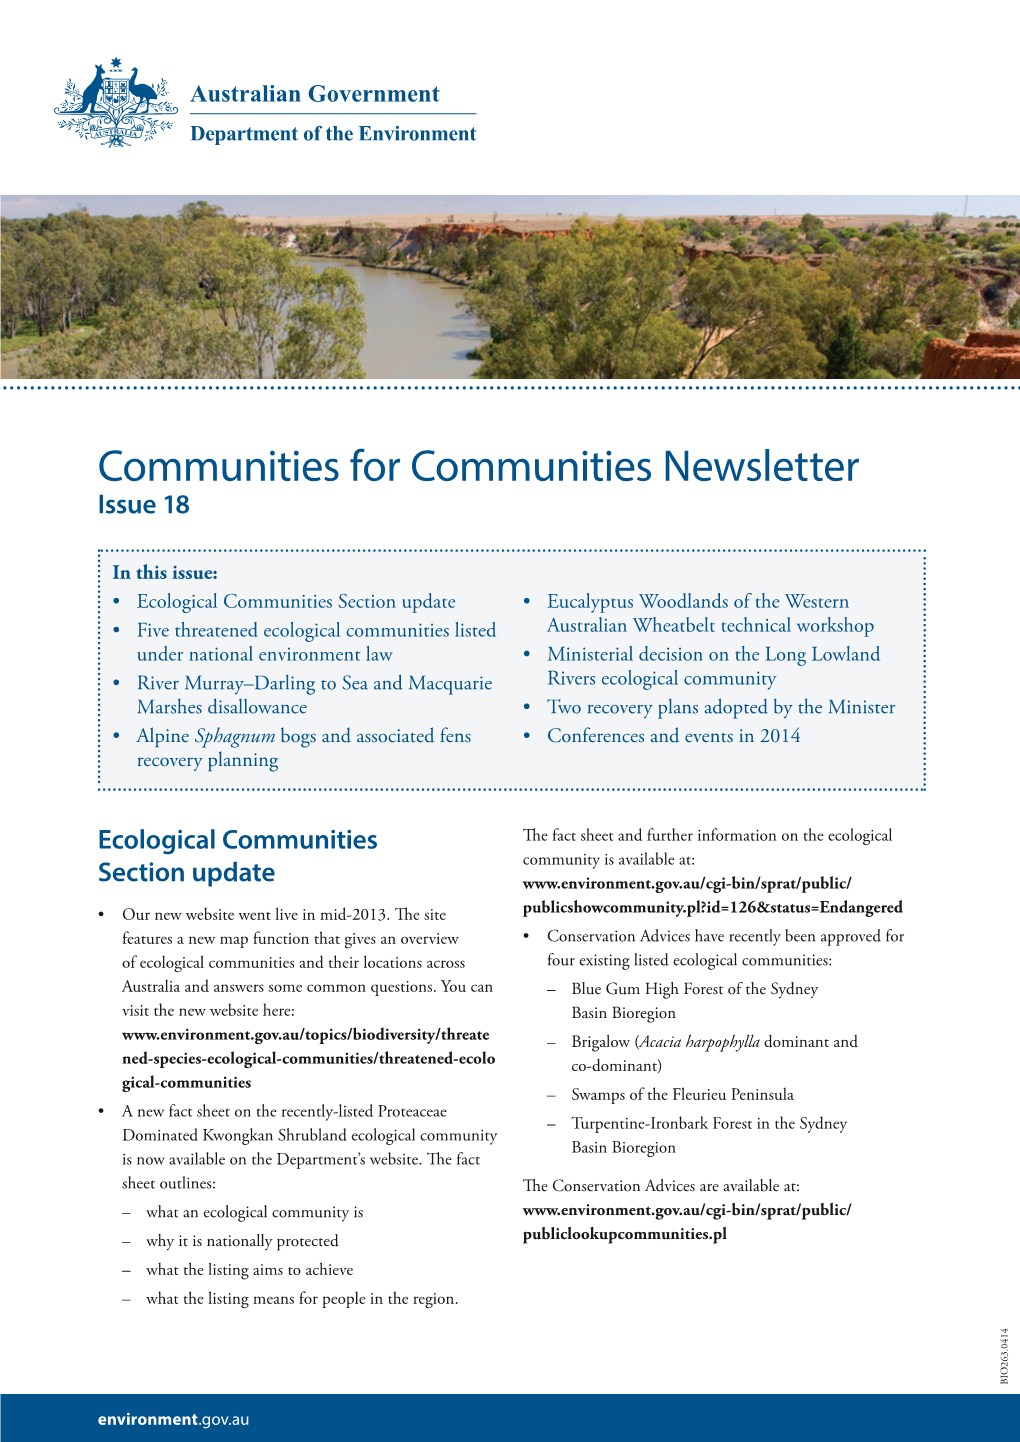 Communities for Communities Newsletter Issue 18